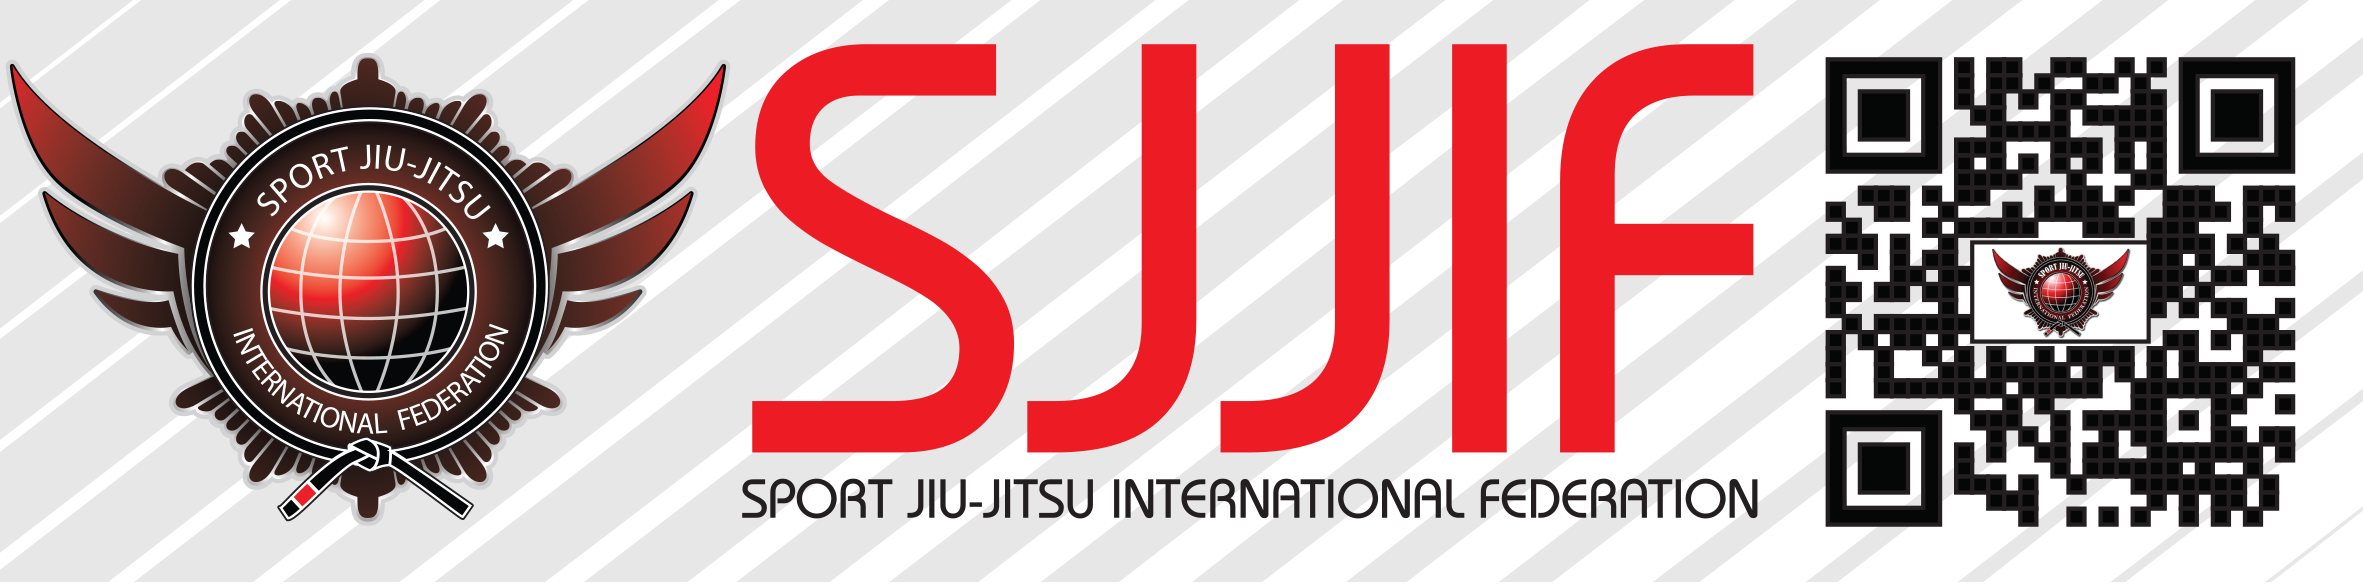 SJJIF Logo